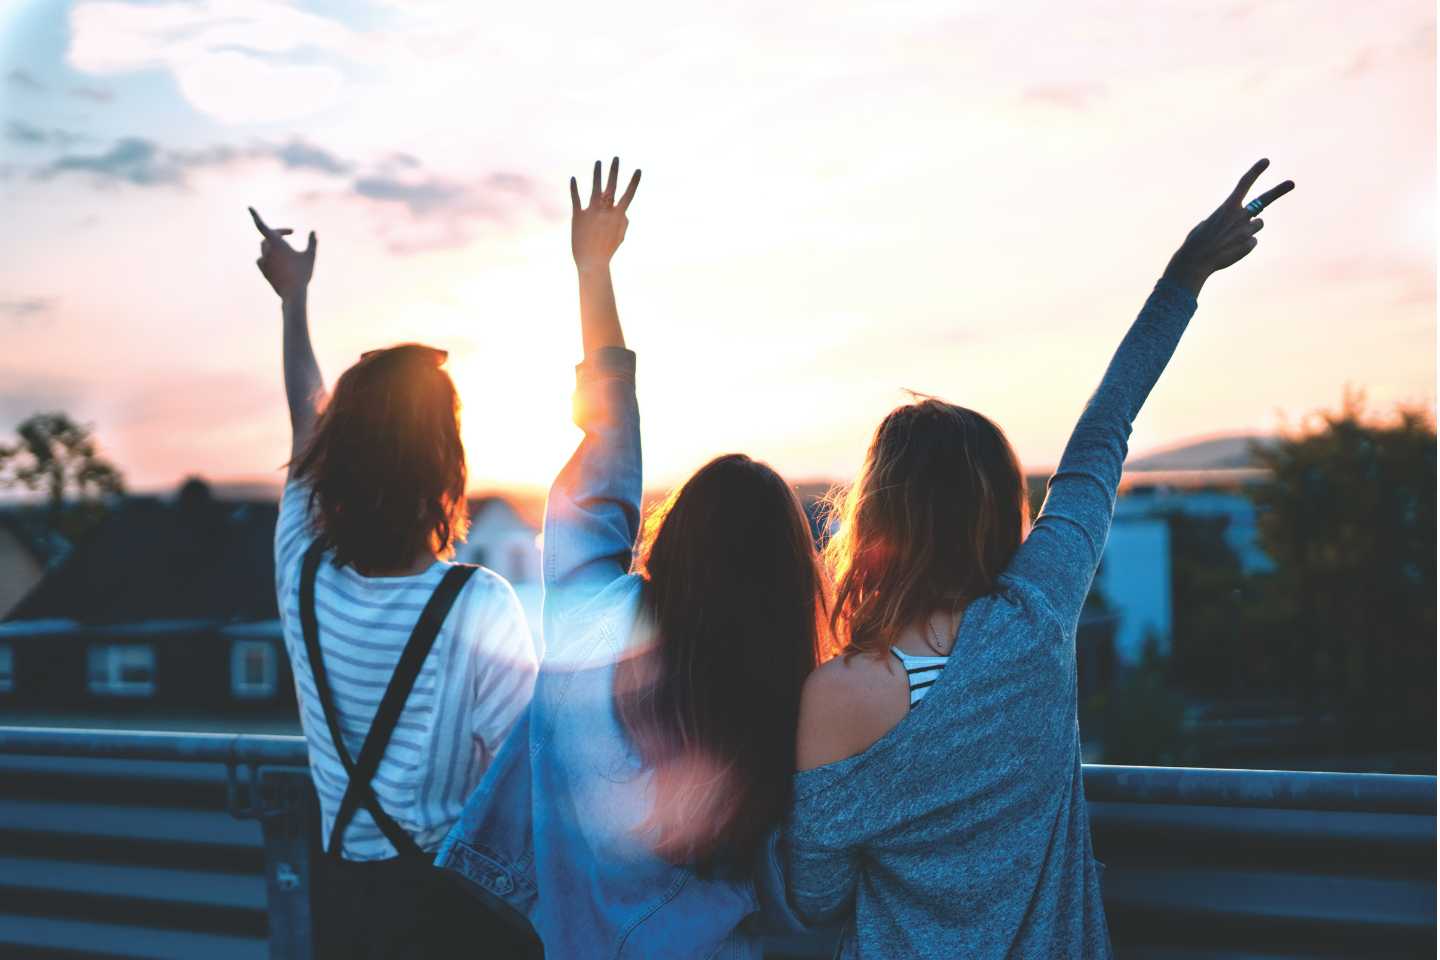 Group of women celebrating the sunset